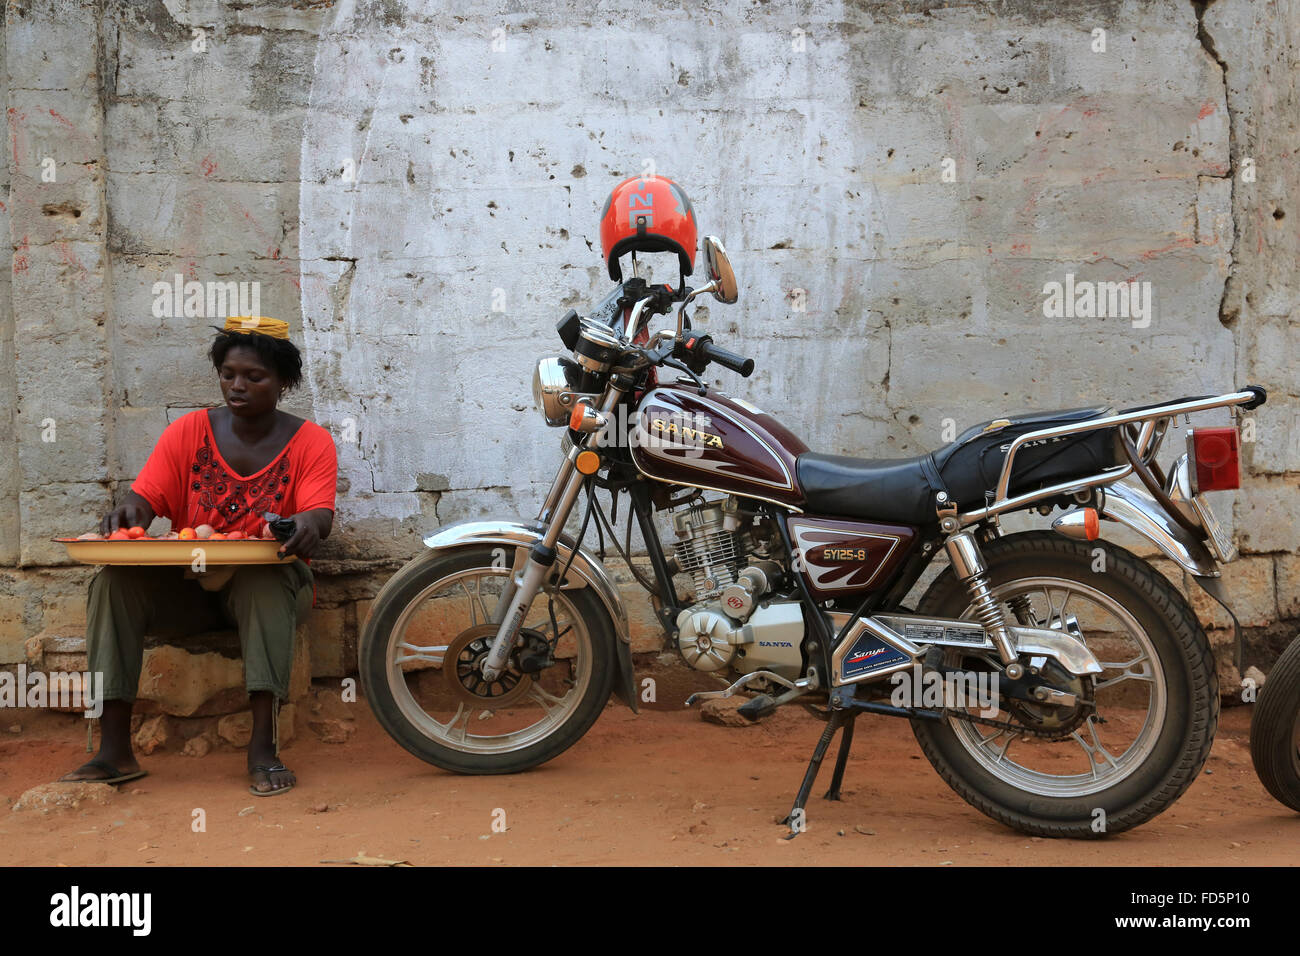 Bike and street seller. Stock Photo